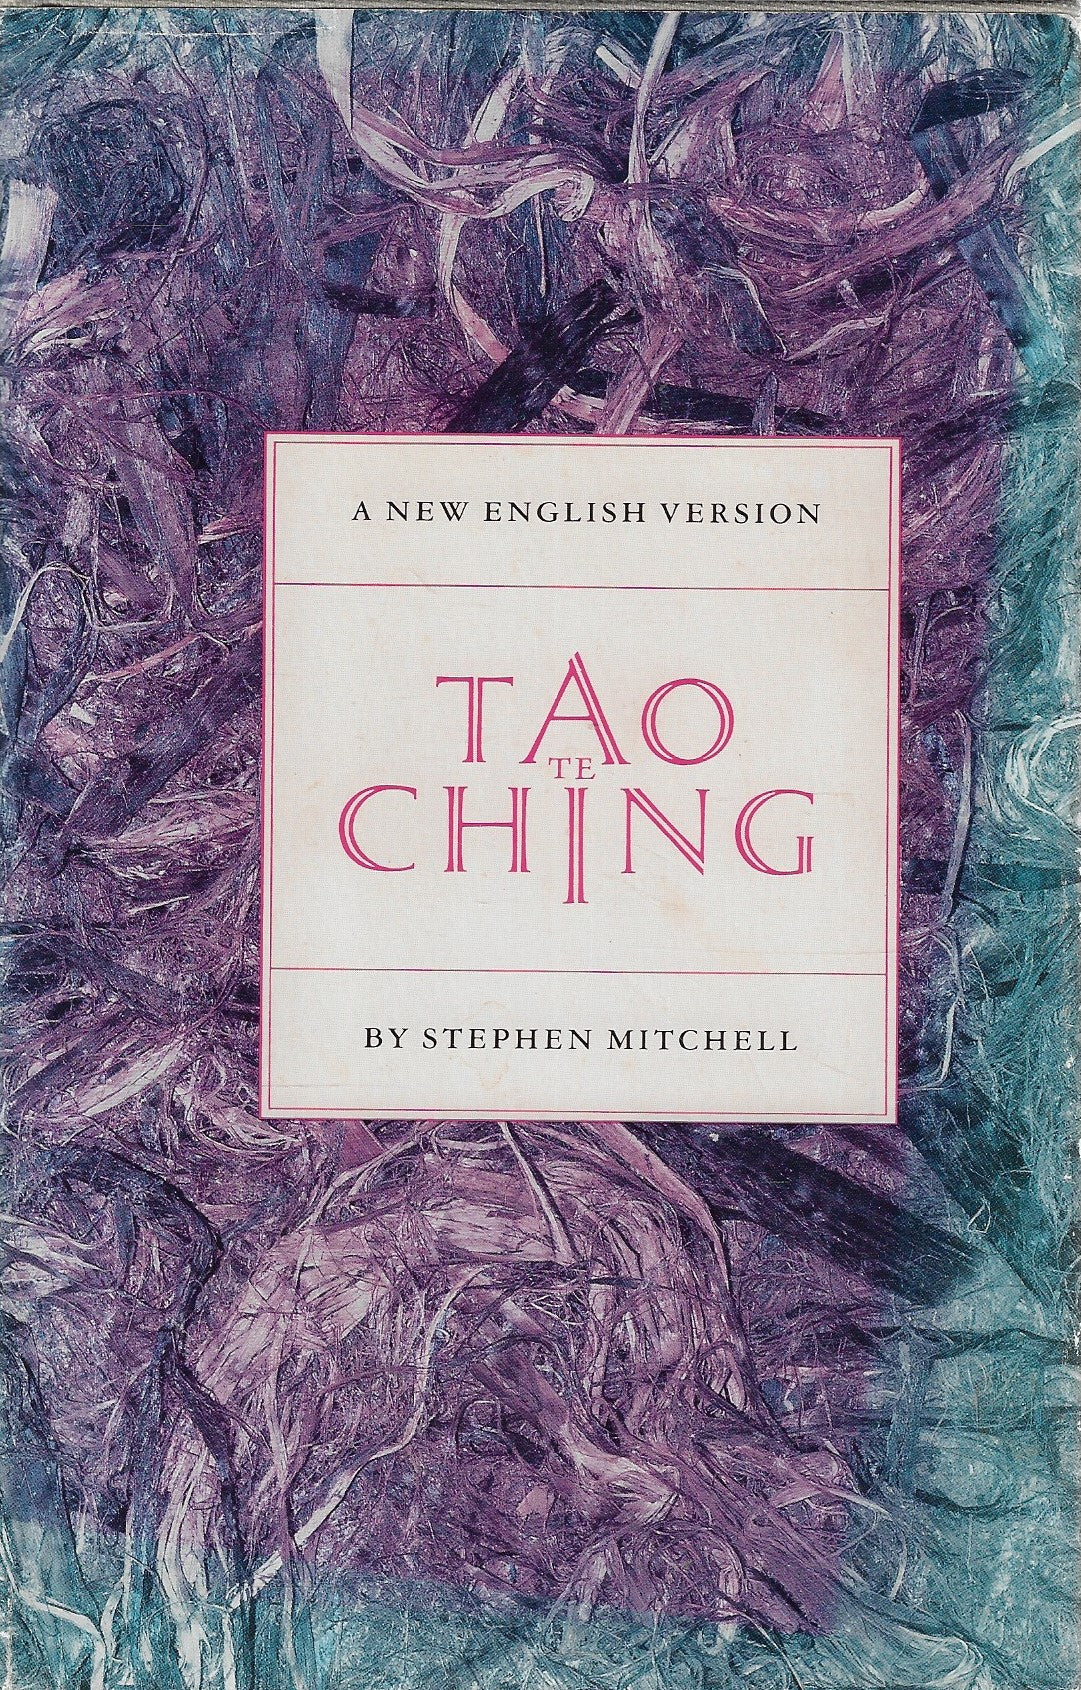 Tao Te Ching / A New English Version